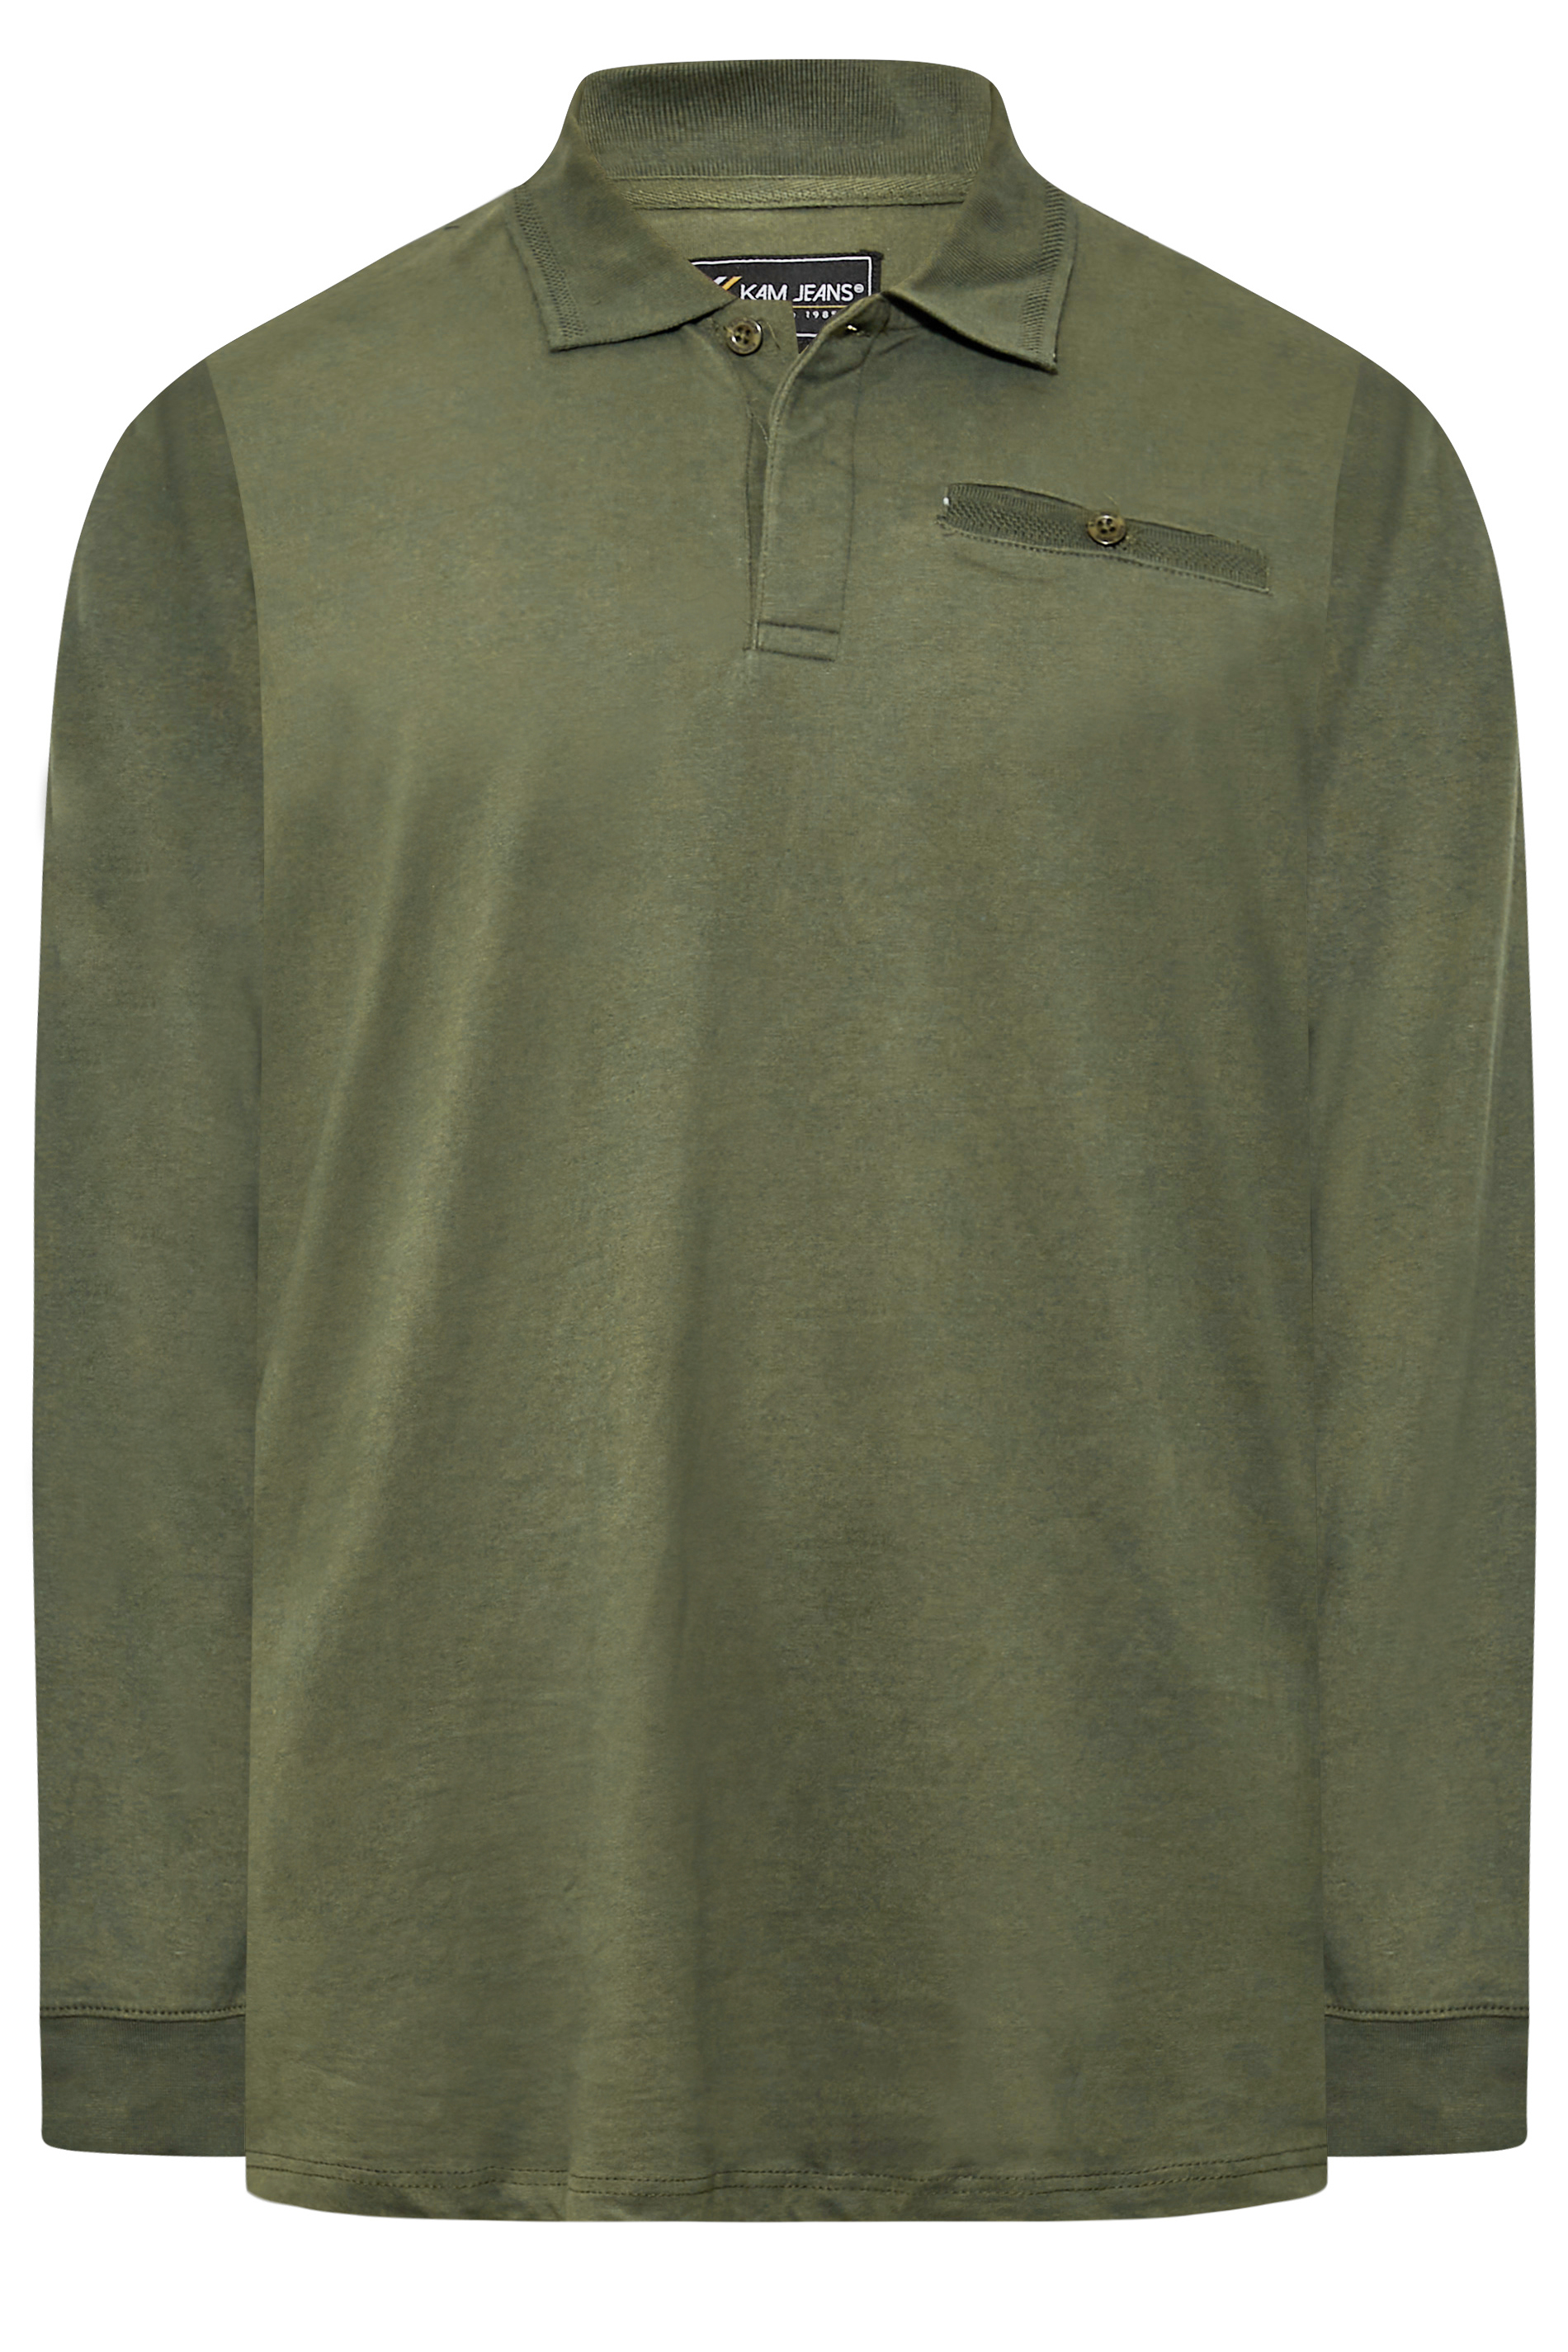 KAM Big & Tall Khaki Green Long Sleeve Polo Shirt 3